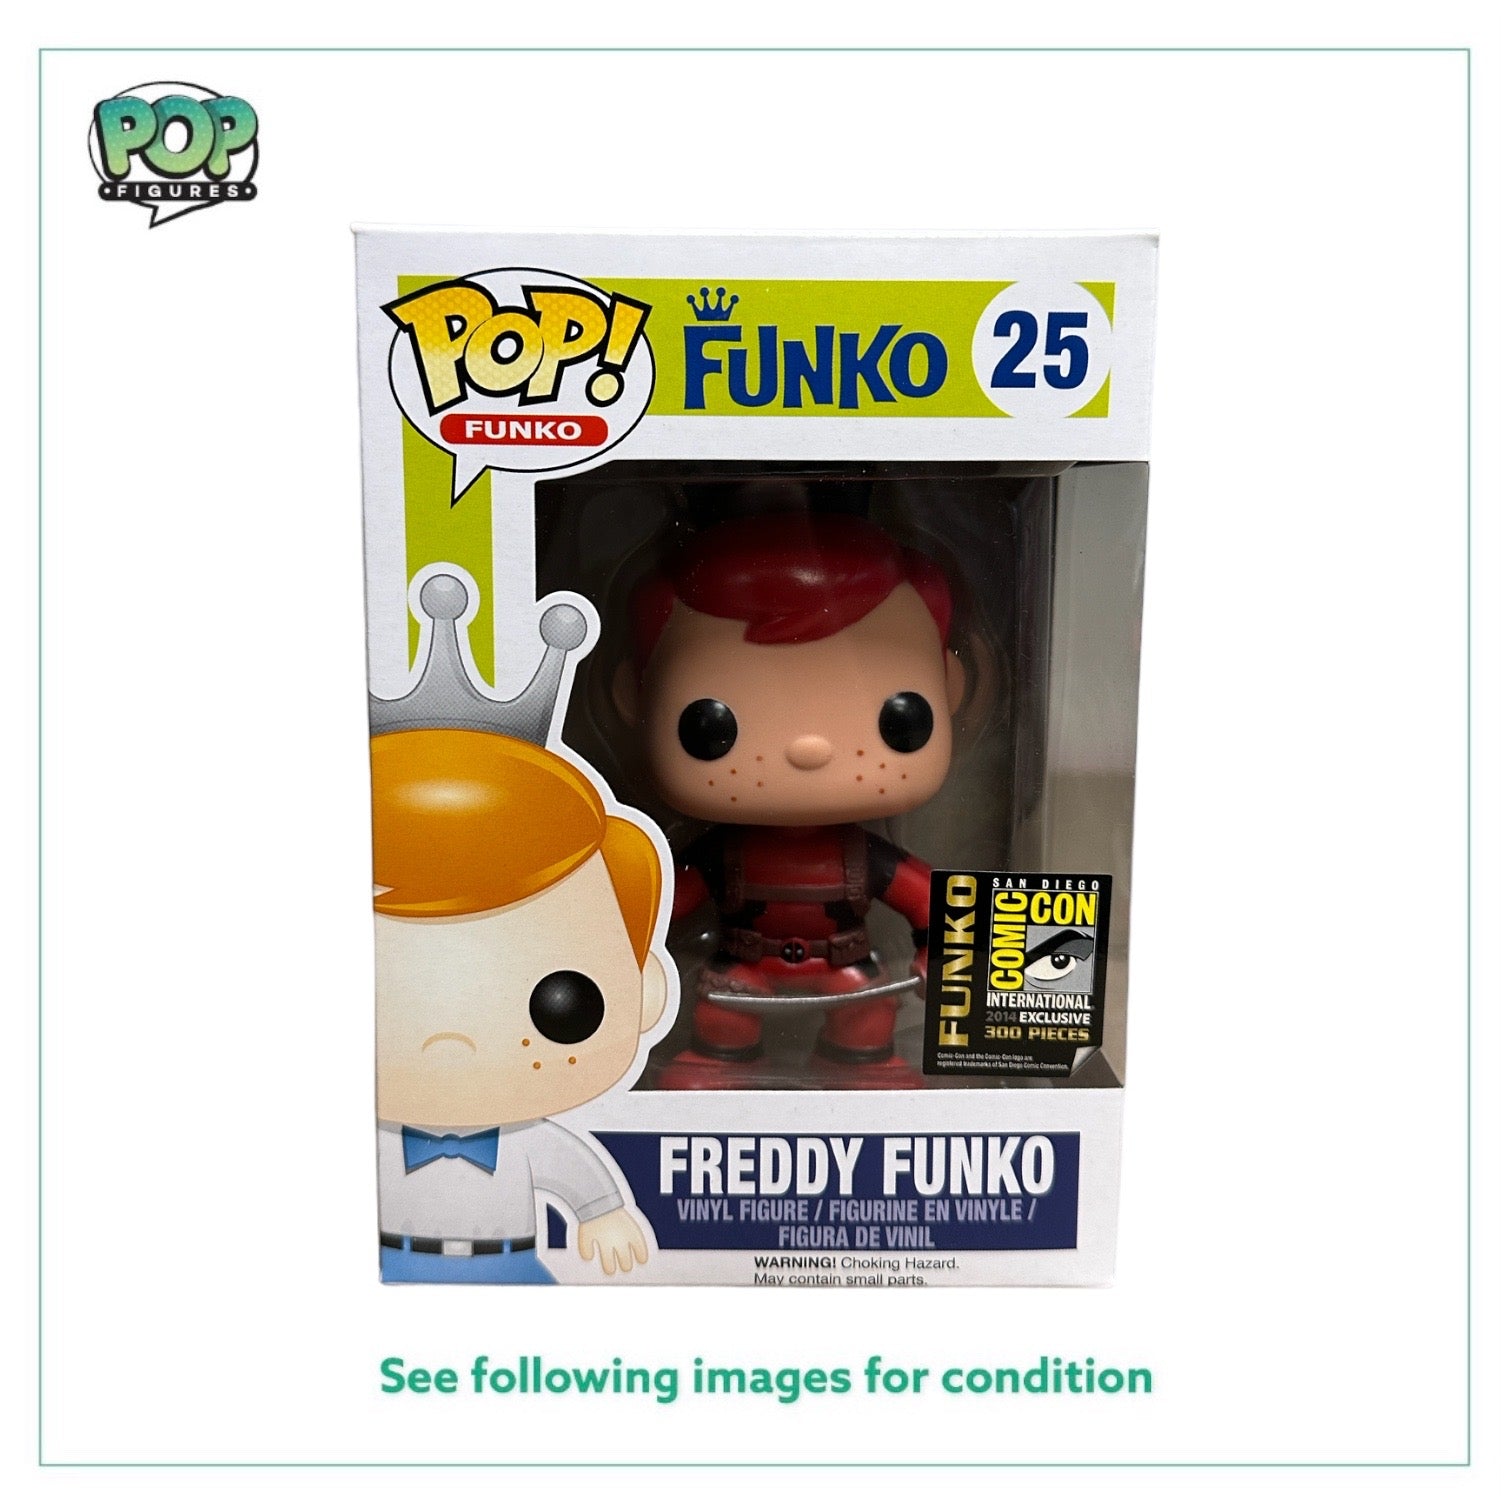 Freddy Funko as Deadpool #25 Funko Pop! - SDCC 2014 Exclusive LE300 Pcs - Condition 8.5/10